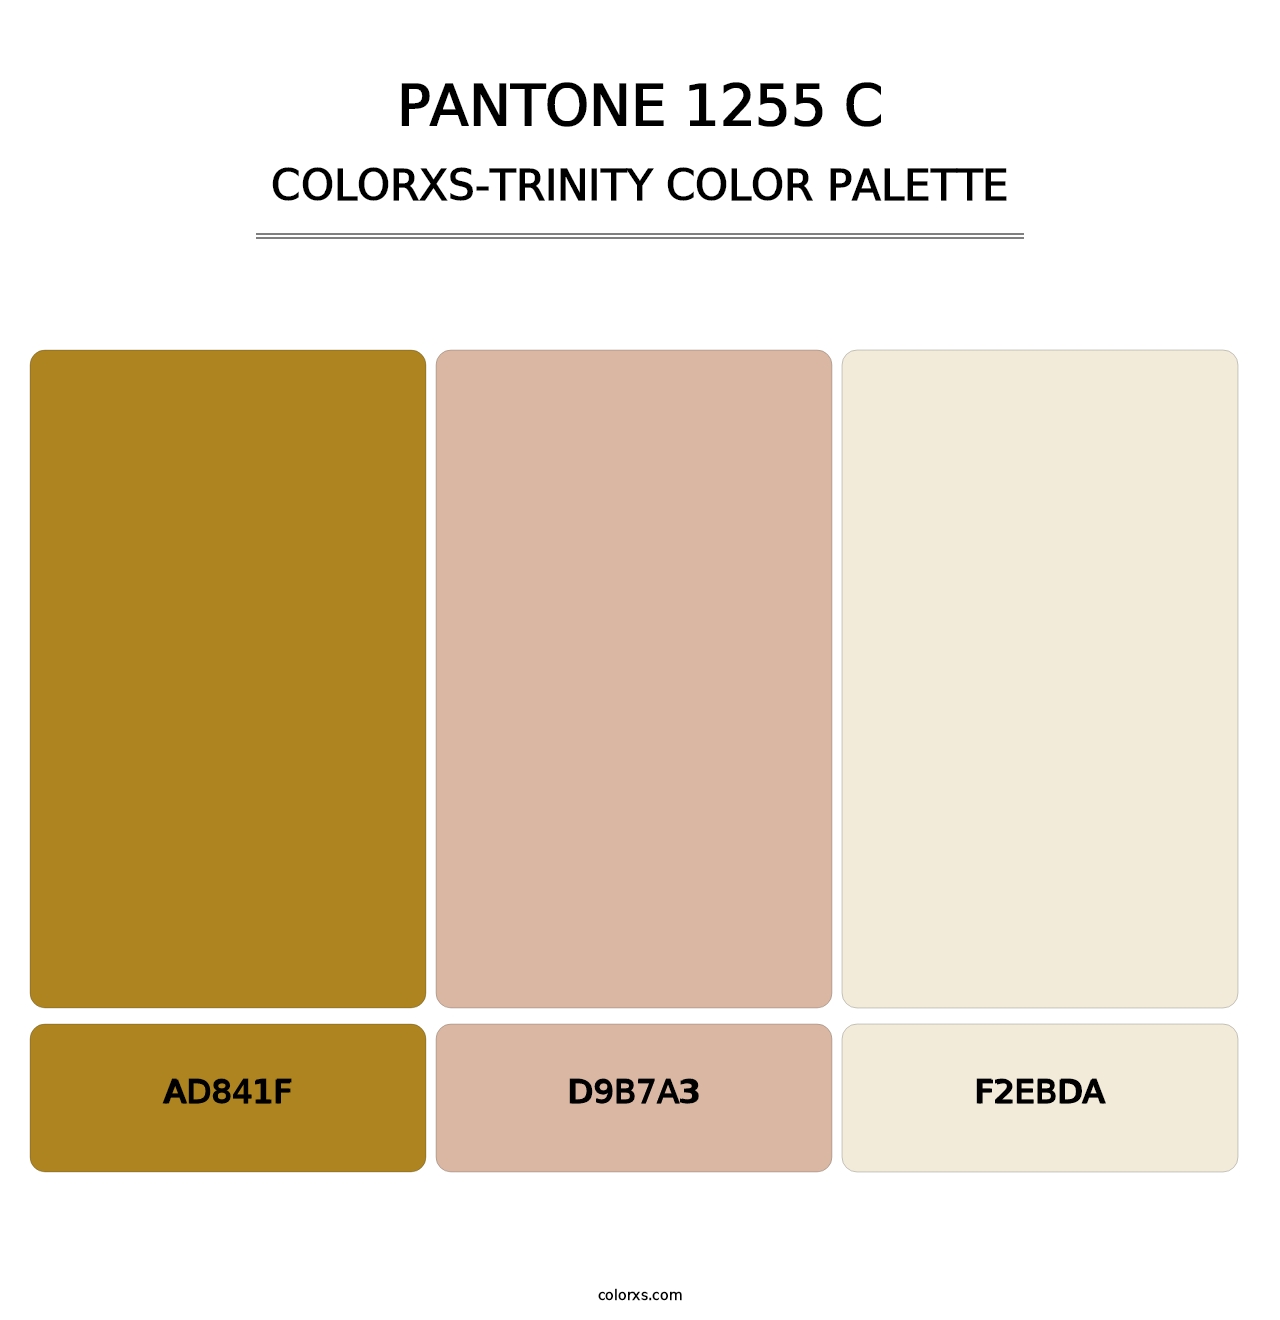 PANTONE 1255 C - Colorxs Trinity Palette